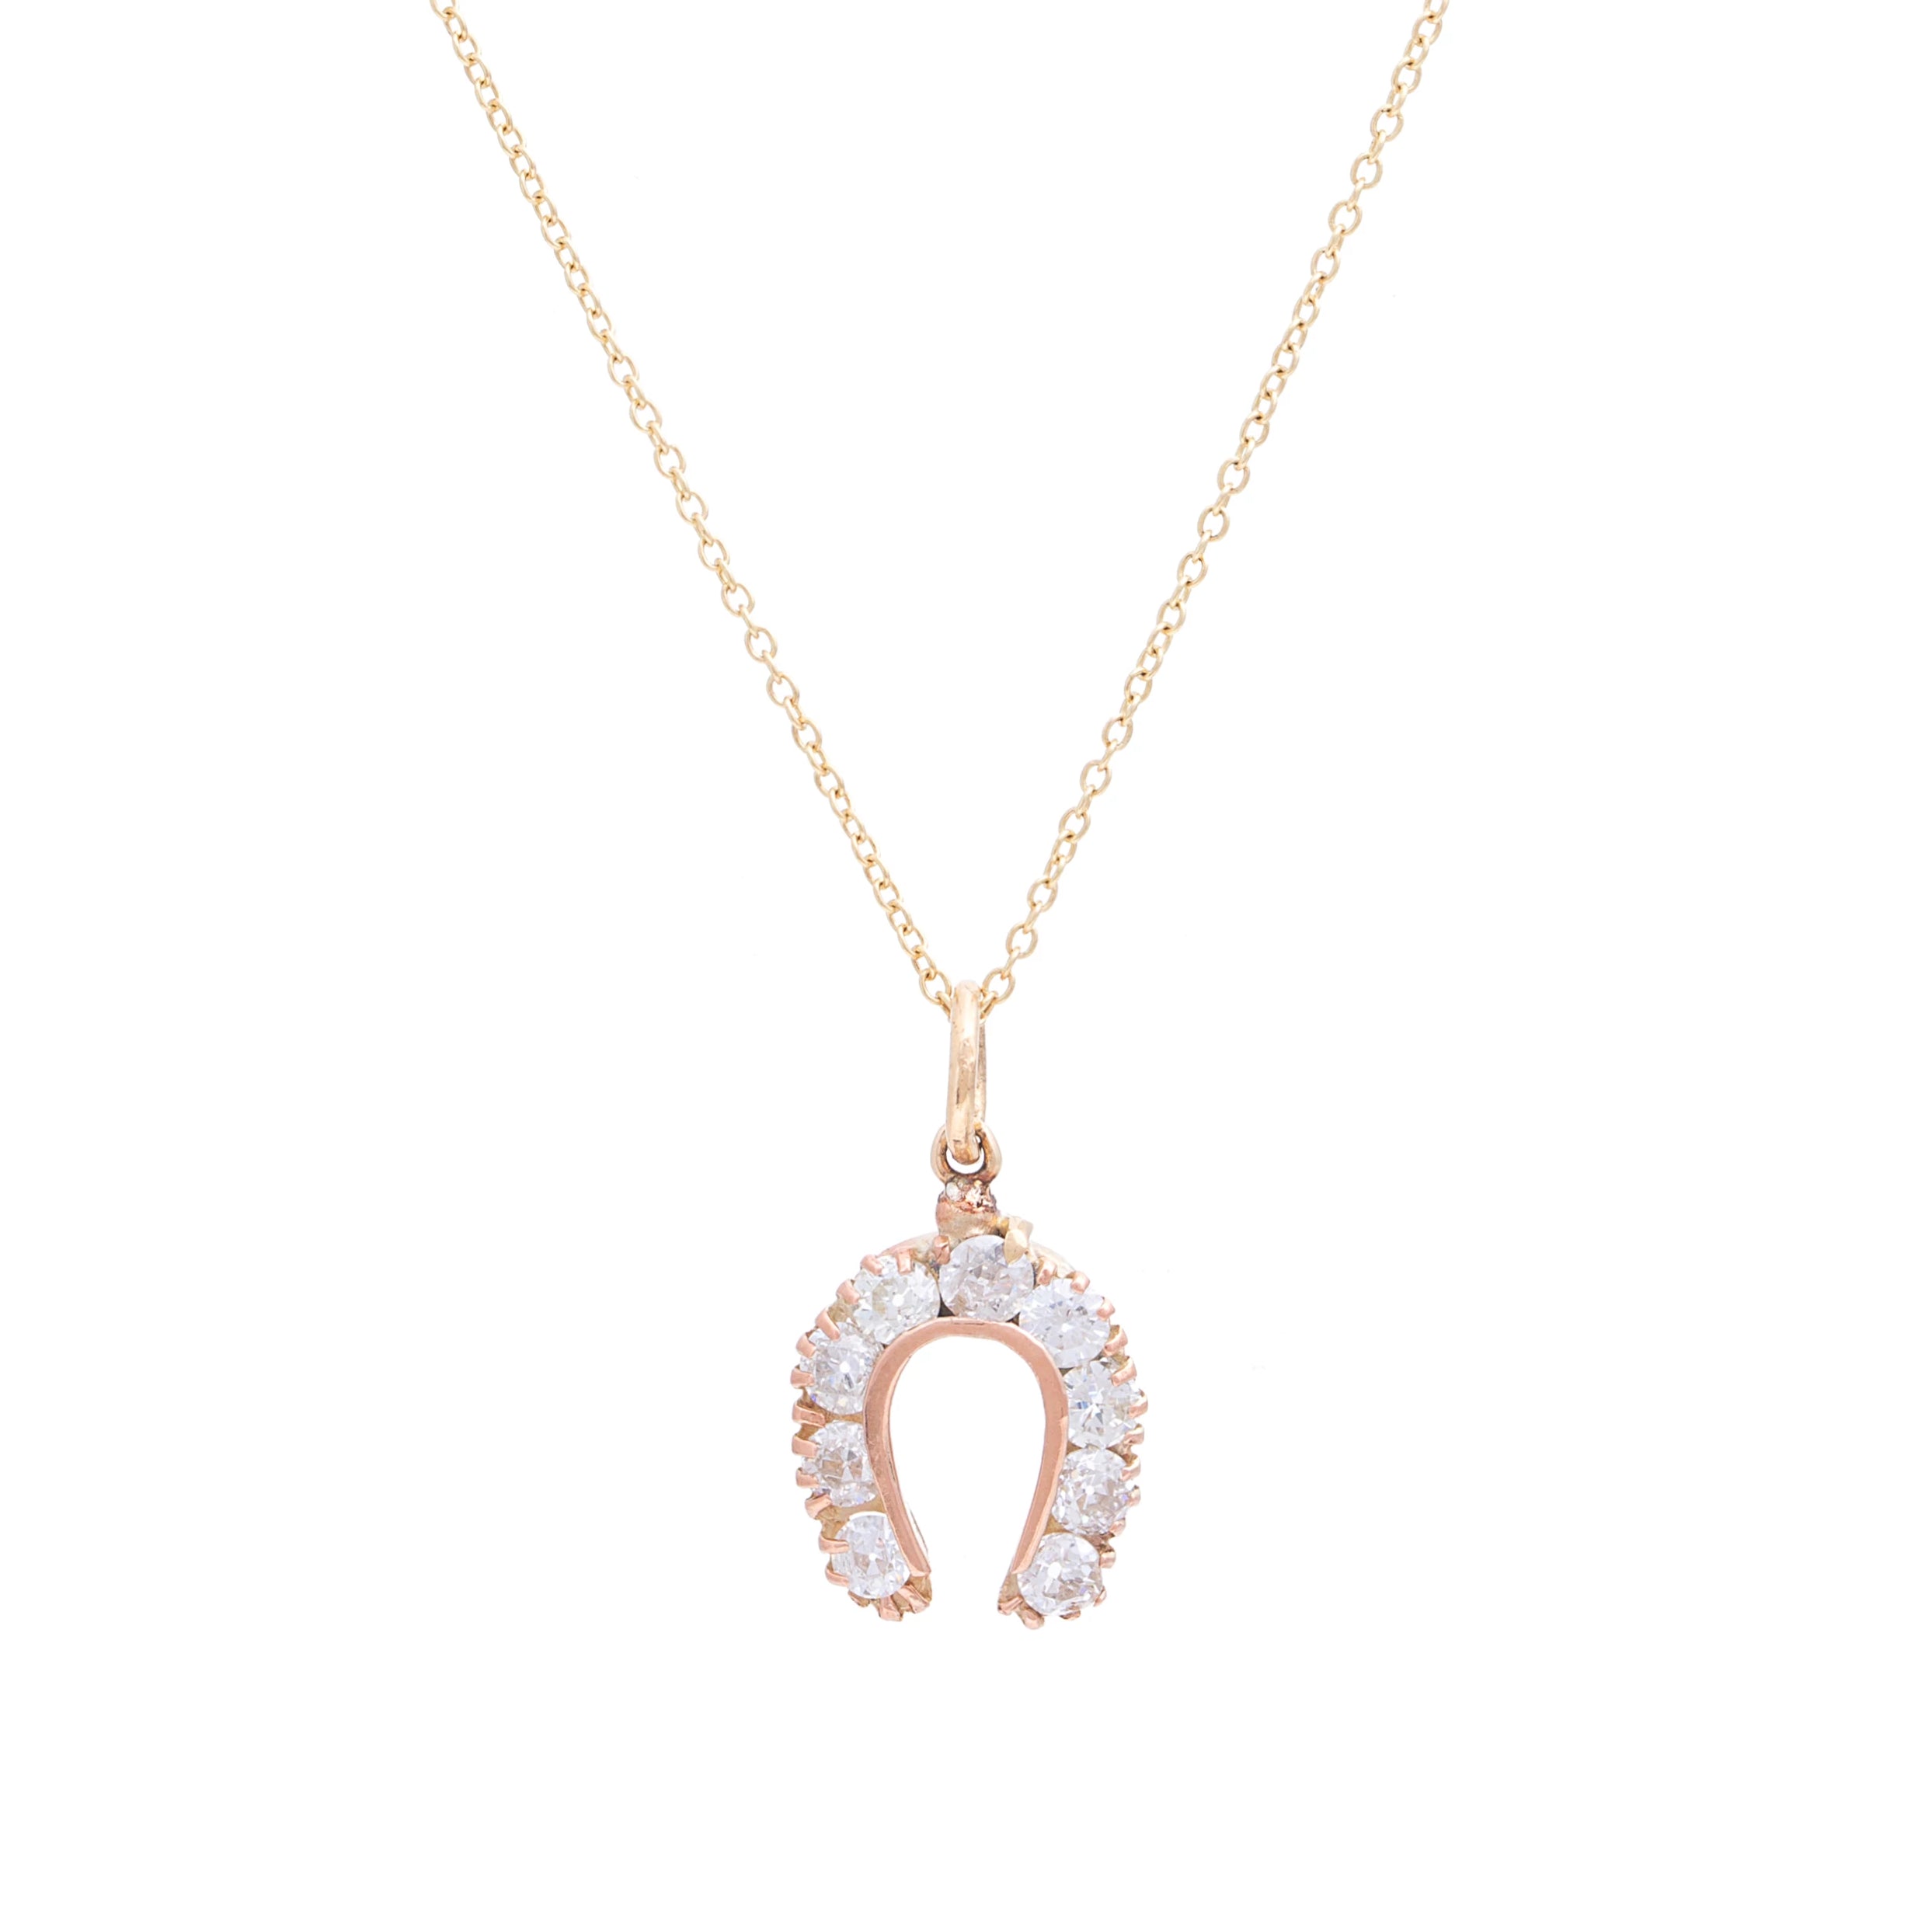 Victorian Old Mine Cut Diamond Horseshoe Pendant Necklace